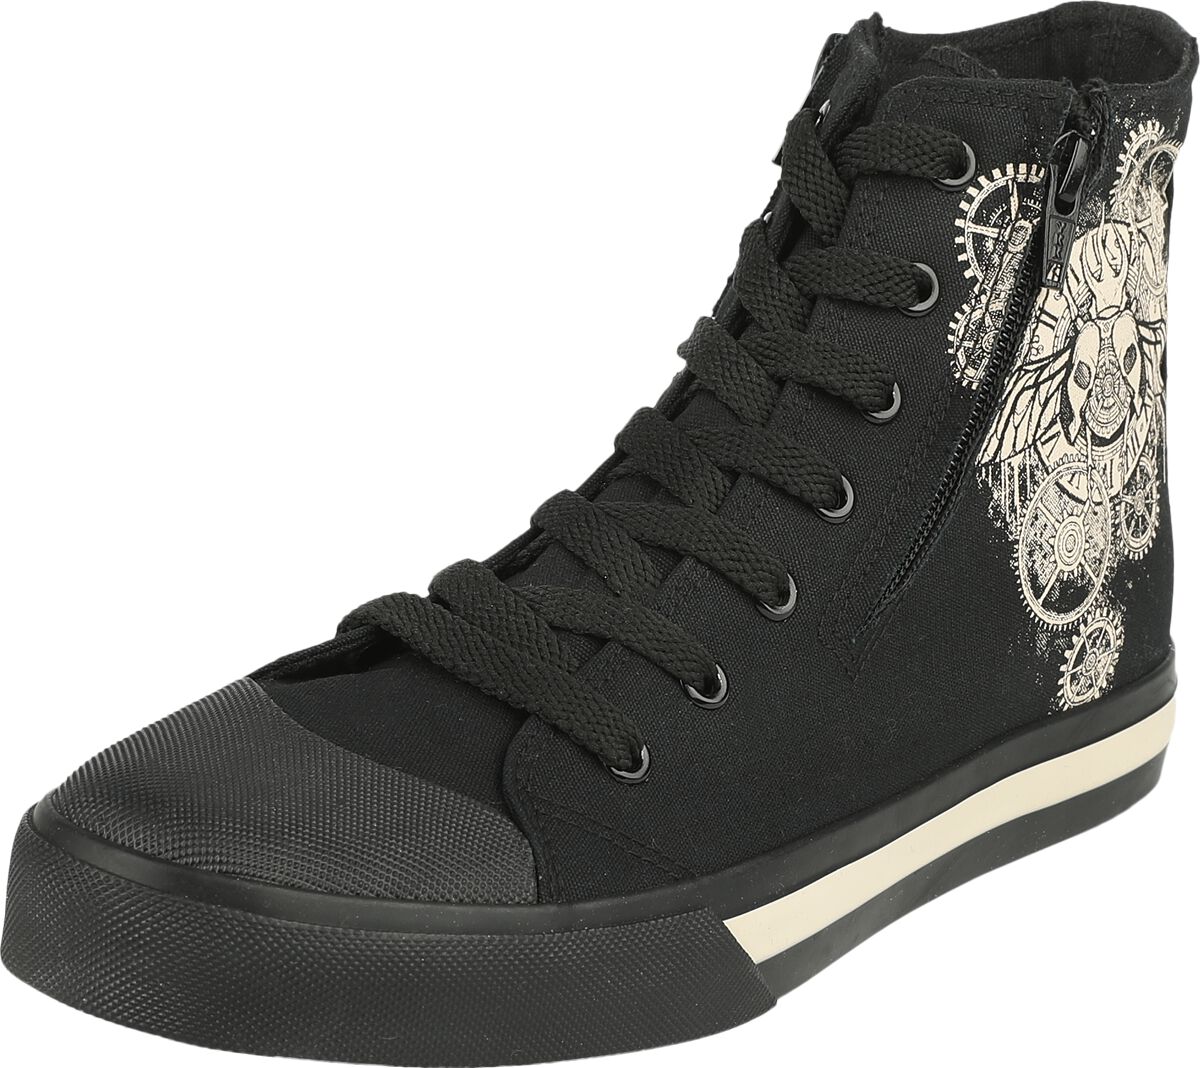 Gothicana by EMP - Gothic Sneaker high - Sneaker with Industrial Beetle Print - EU37 bis EU46 - Größe EU46 - schwarz